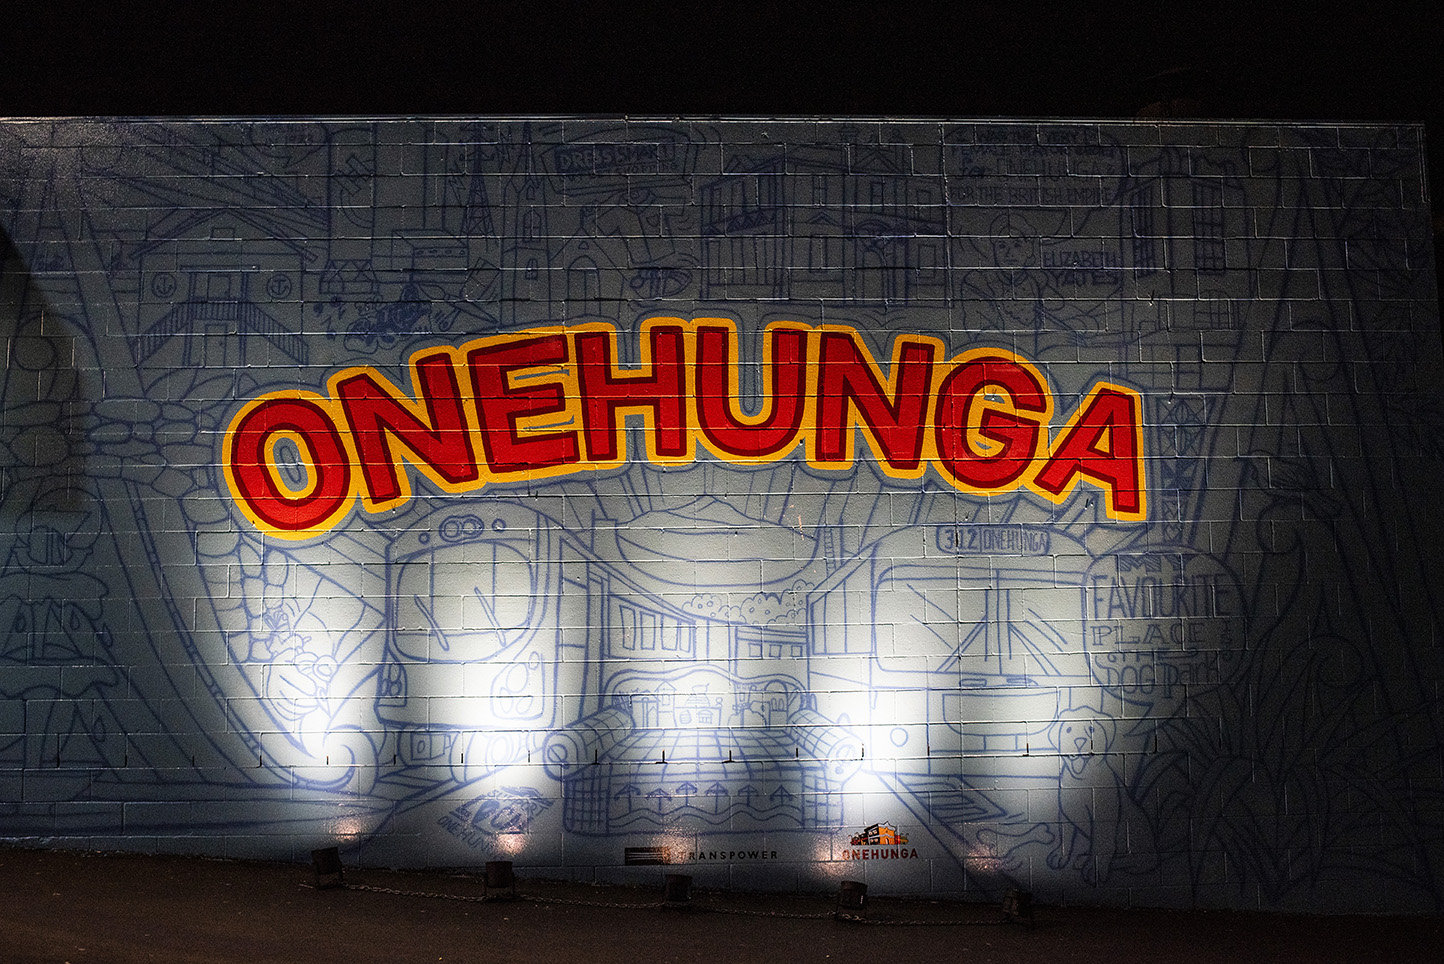 Onehunga Business Association's mural lit up at night